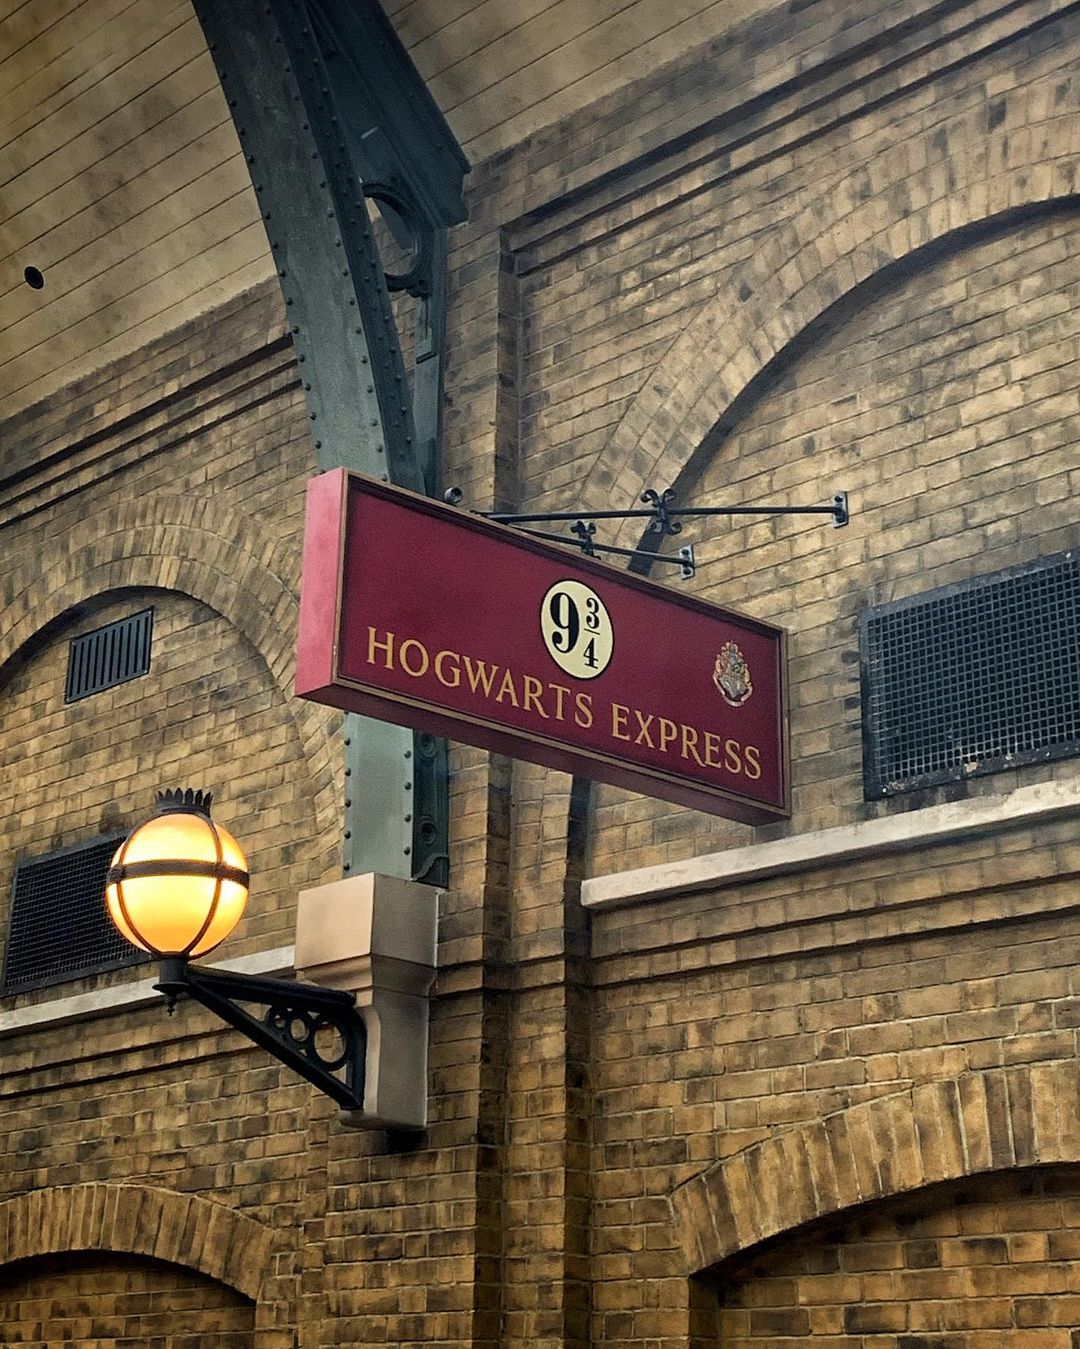 Hogwarts Express Station at Diagon Alley - Harry Potter Area at Universal Studios Orlando (6)